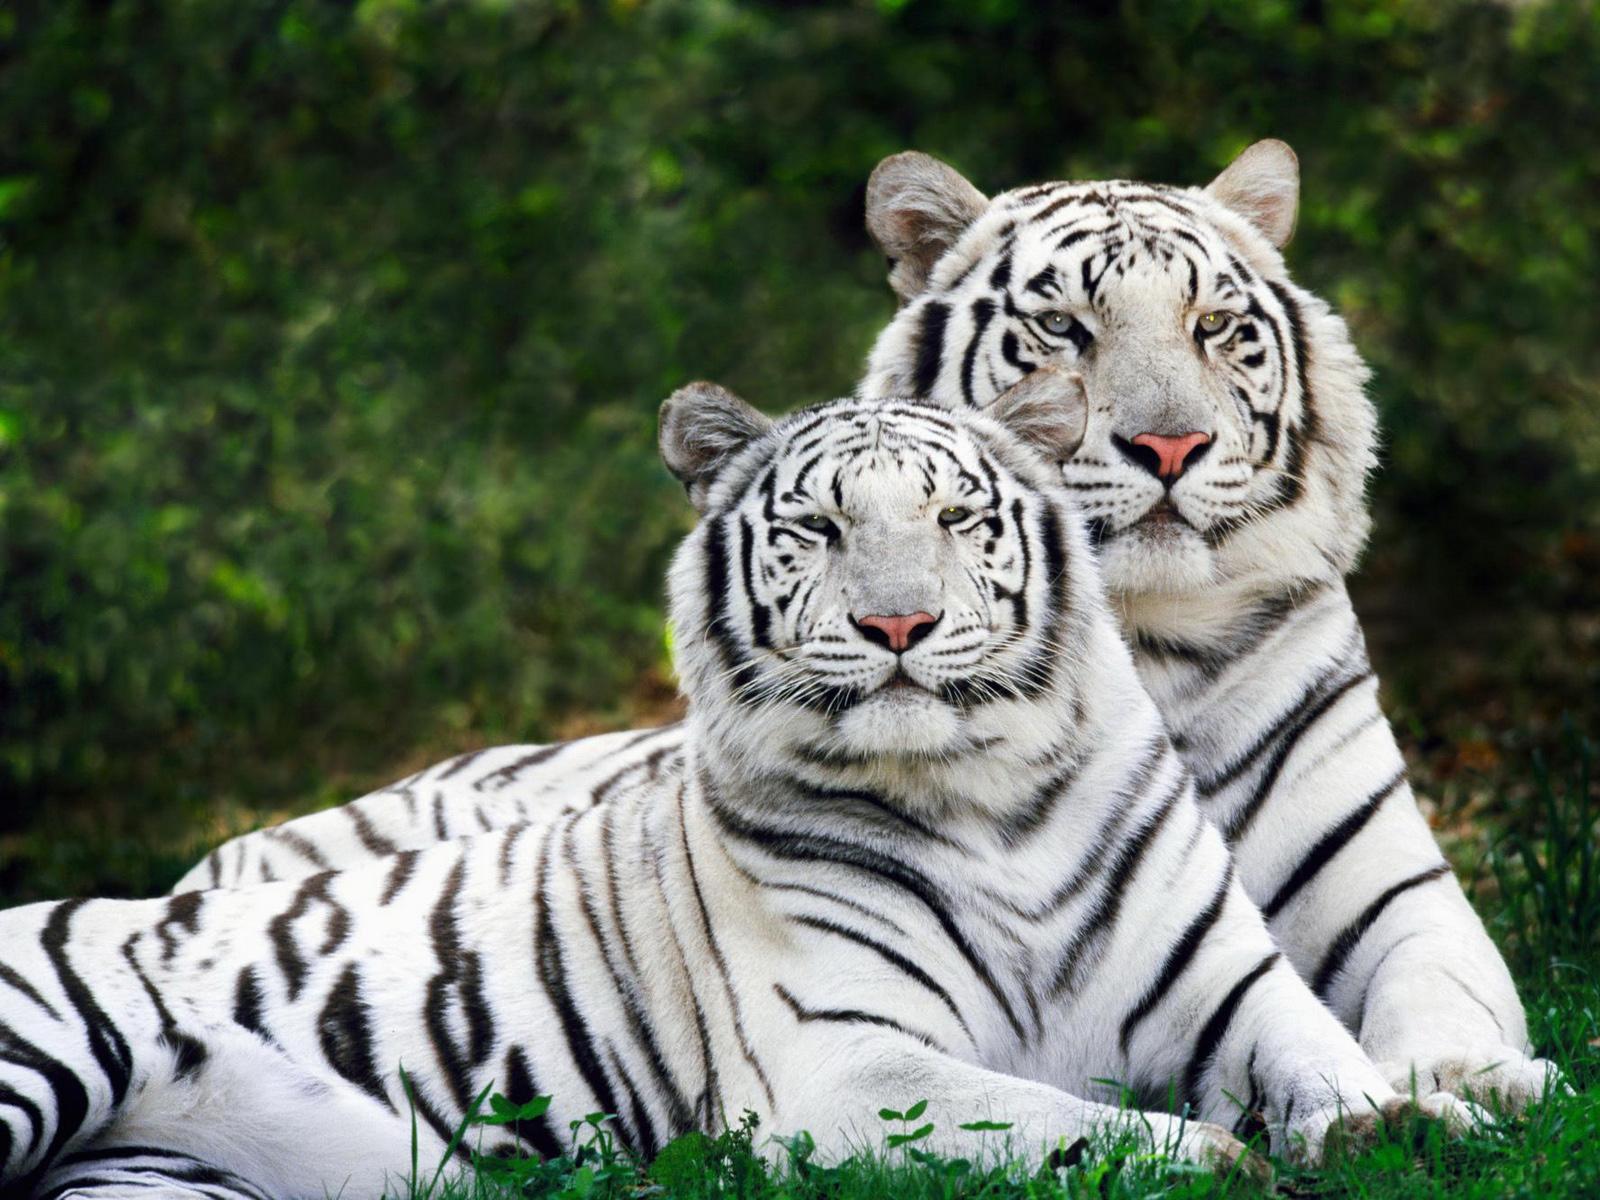 http://2.bp.blogspot.com/-zngvnFxE2vM/Tie_lXkzQpI/AAAAAAAARlU/1dFEN-7-SfQ/s1600/White_Bengal_Tigers.jpg